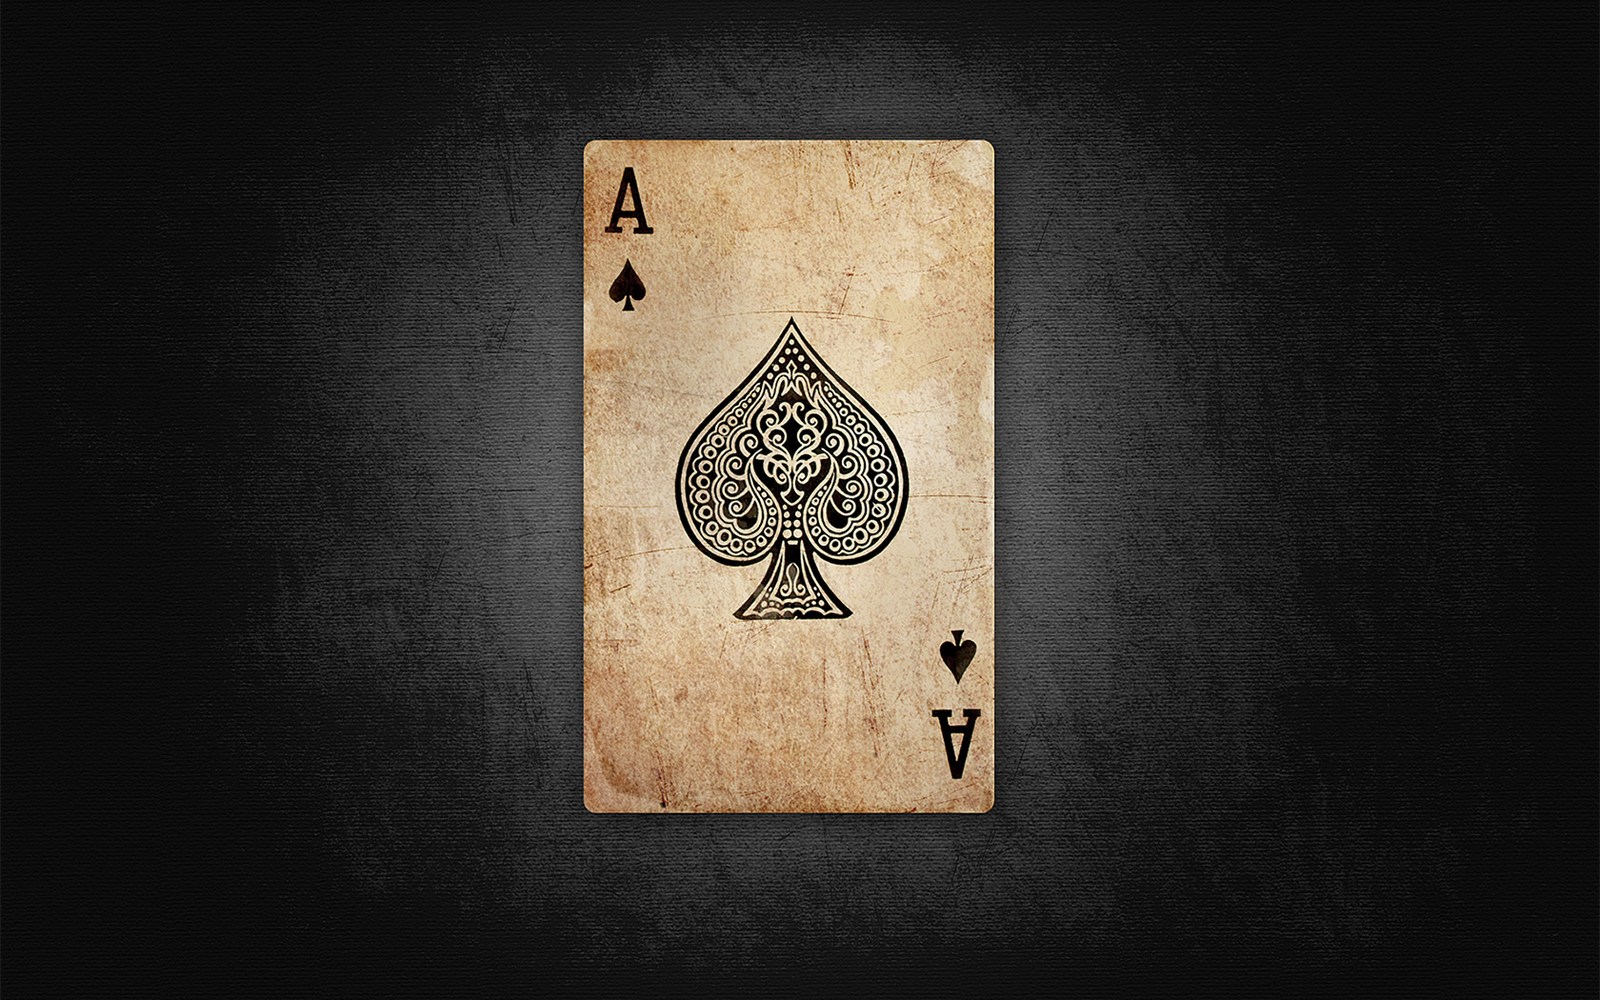 http://2.bp.blogspot.com/-AqxKhqKIeCI/TgXghvLw6kI/AAAAAAAACbY/42WJ8Pk0iCI/s1600/ace-of-spades-01.jpg